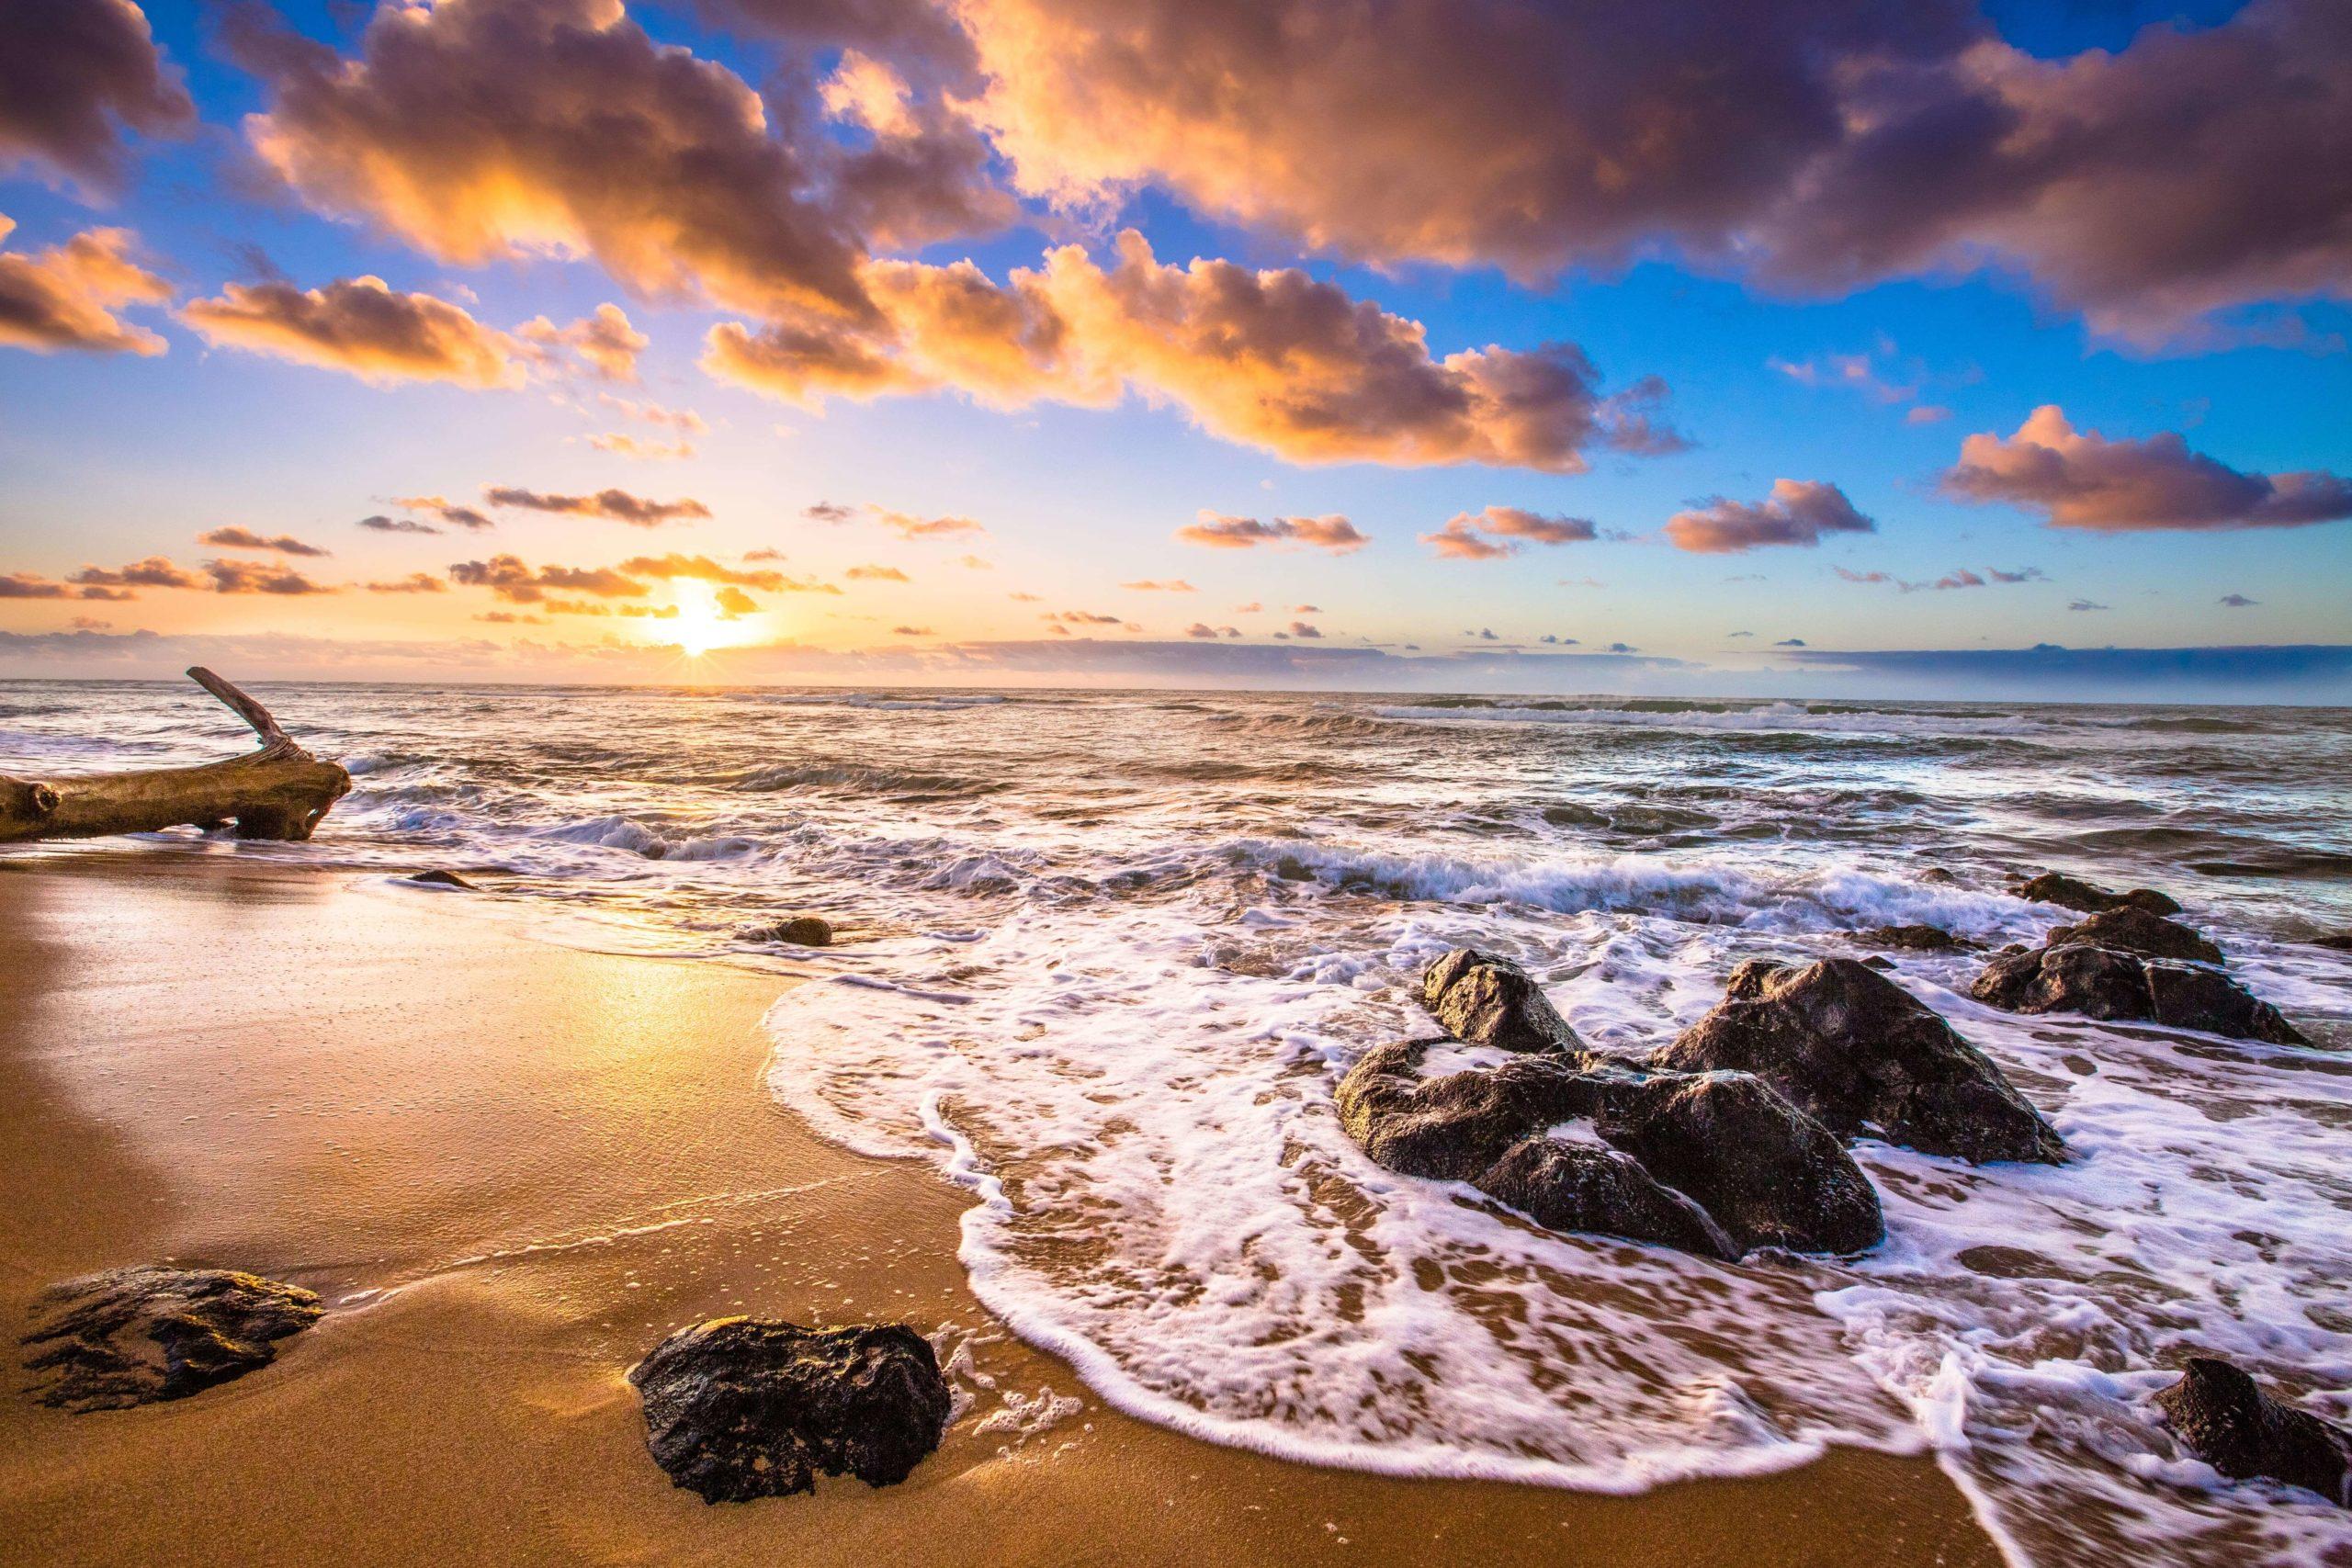 Kauai Sunrise 5 Spot to Experience the Best Sunrises